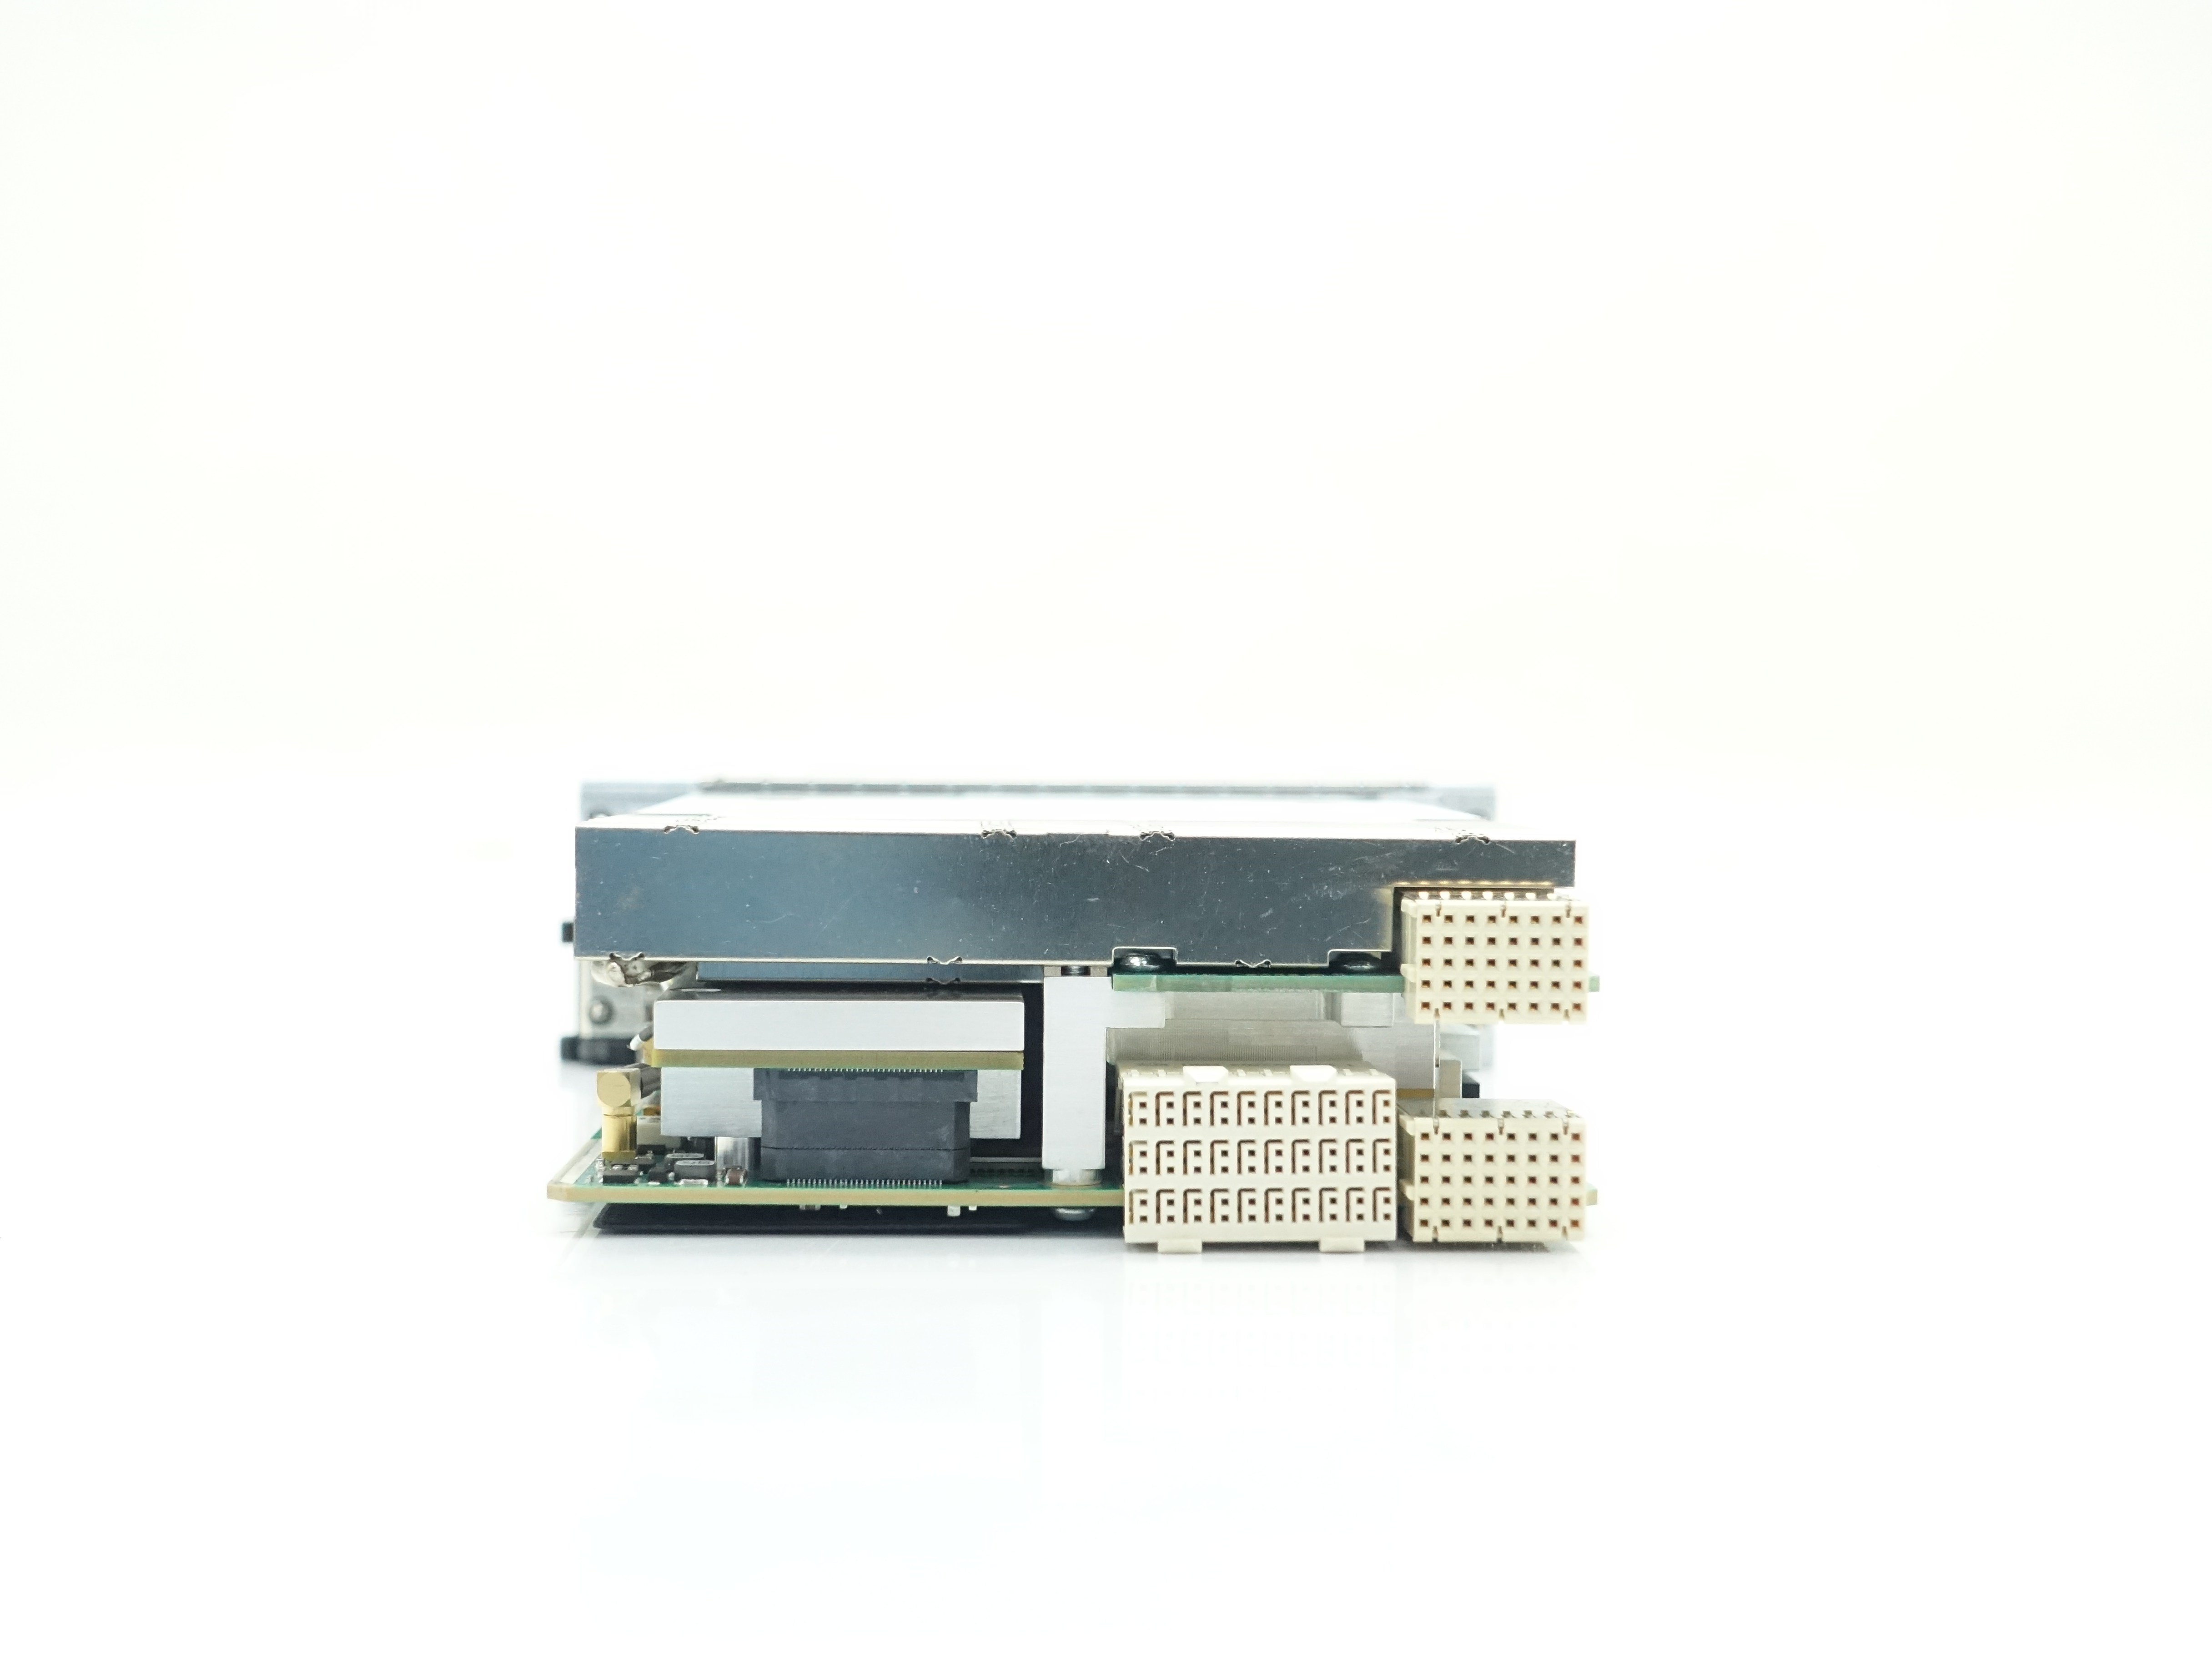 Keysight M9203A PXIe High-Speed Digitizer/Wideband Digital Receiver / 12-bit / 3.2 GS/s / FPGA Signal Processing